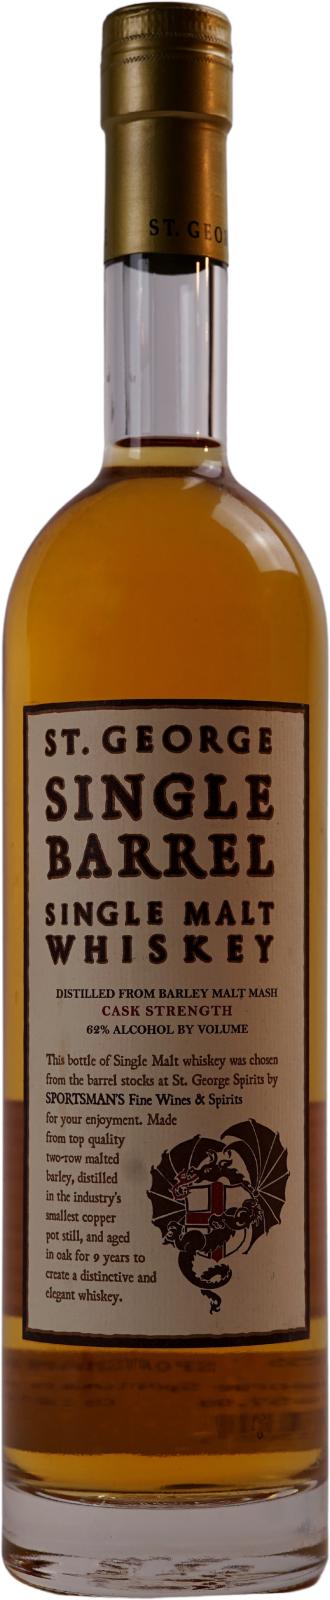 St. George Single Barrel Single Malt Whisky Sportsman's Fine Wine & Spirits 62% 750ml